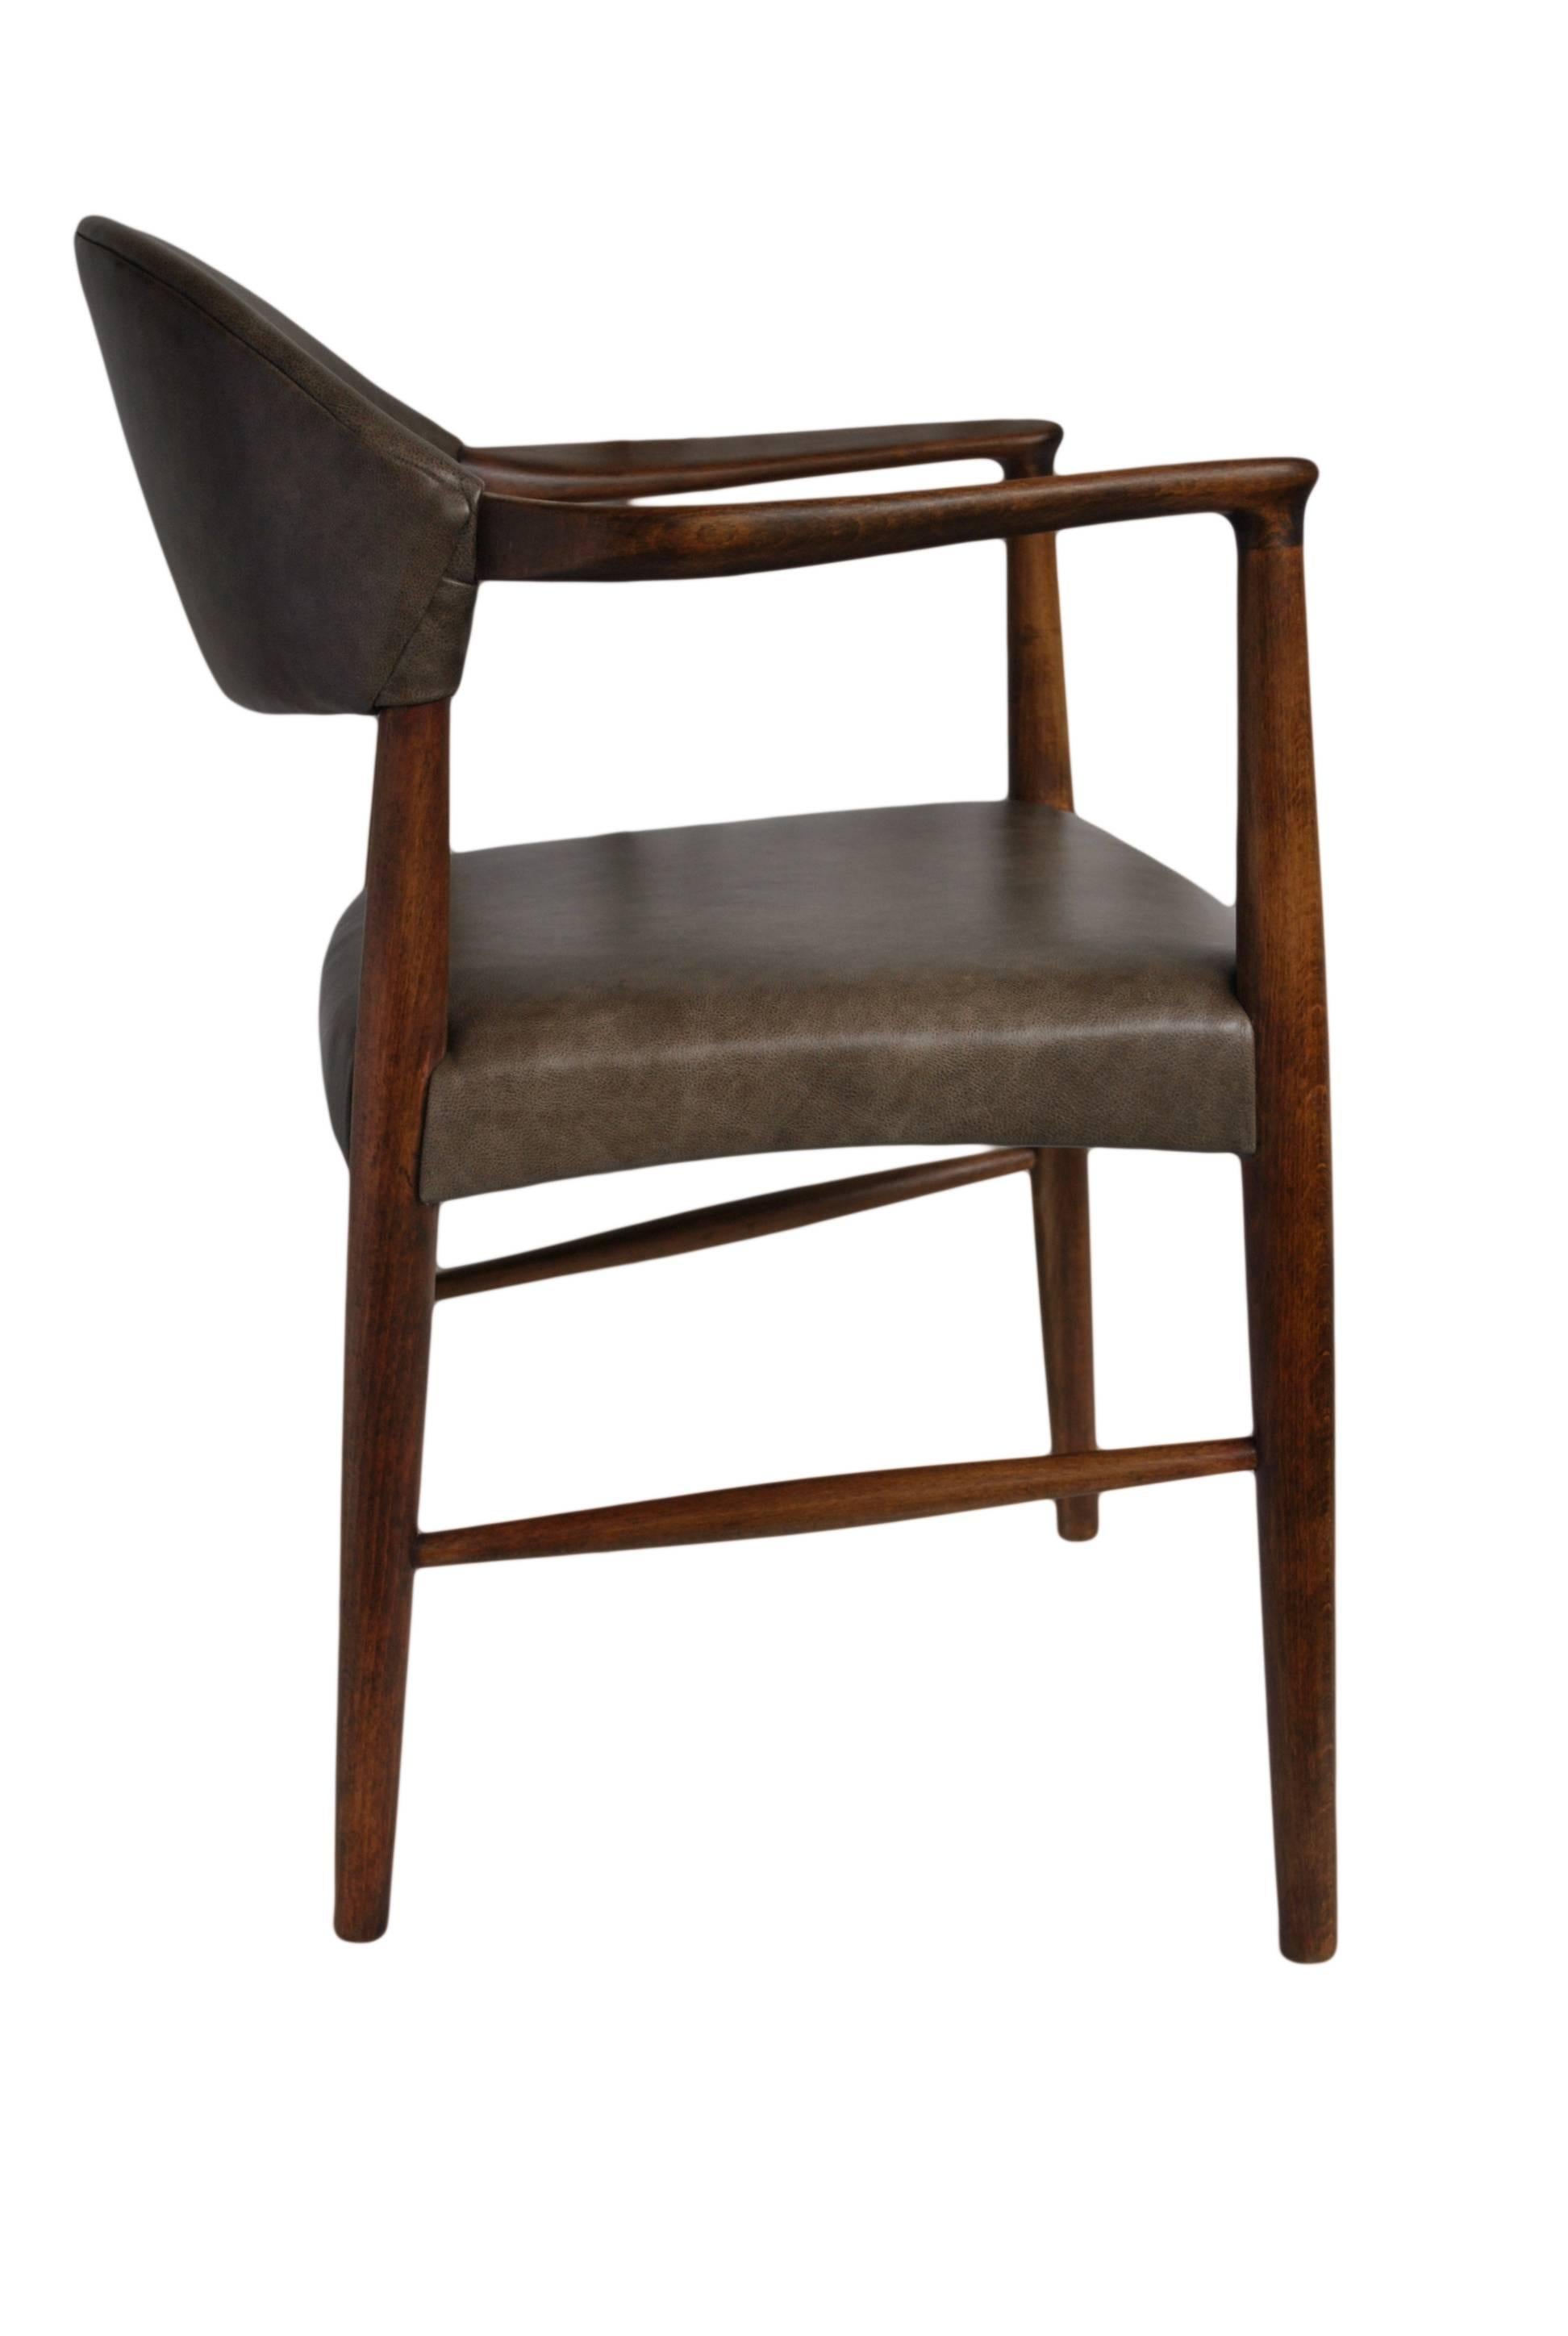 Danish Kurt Olsen Chair, fully refurbished and with new Italian Leather